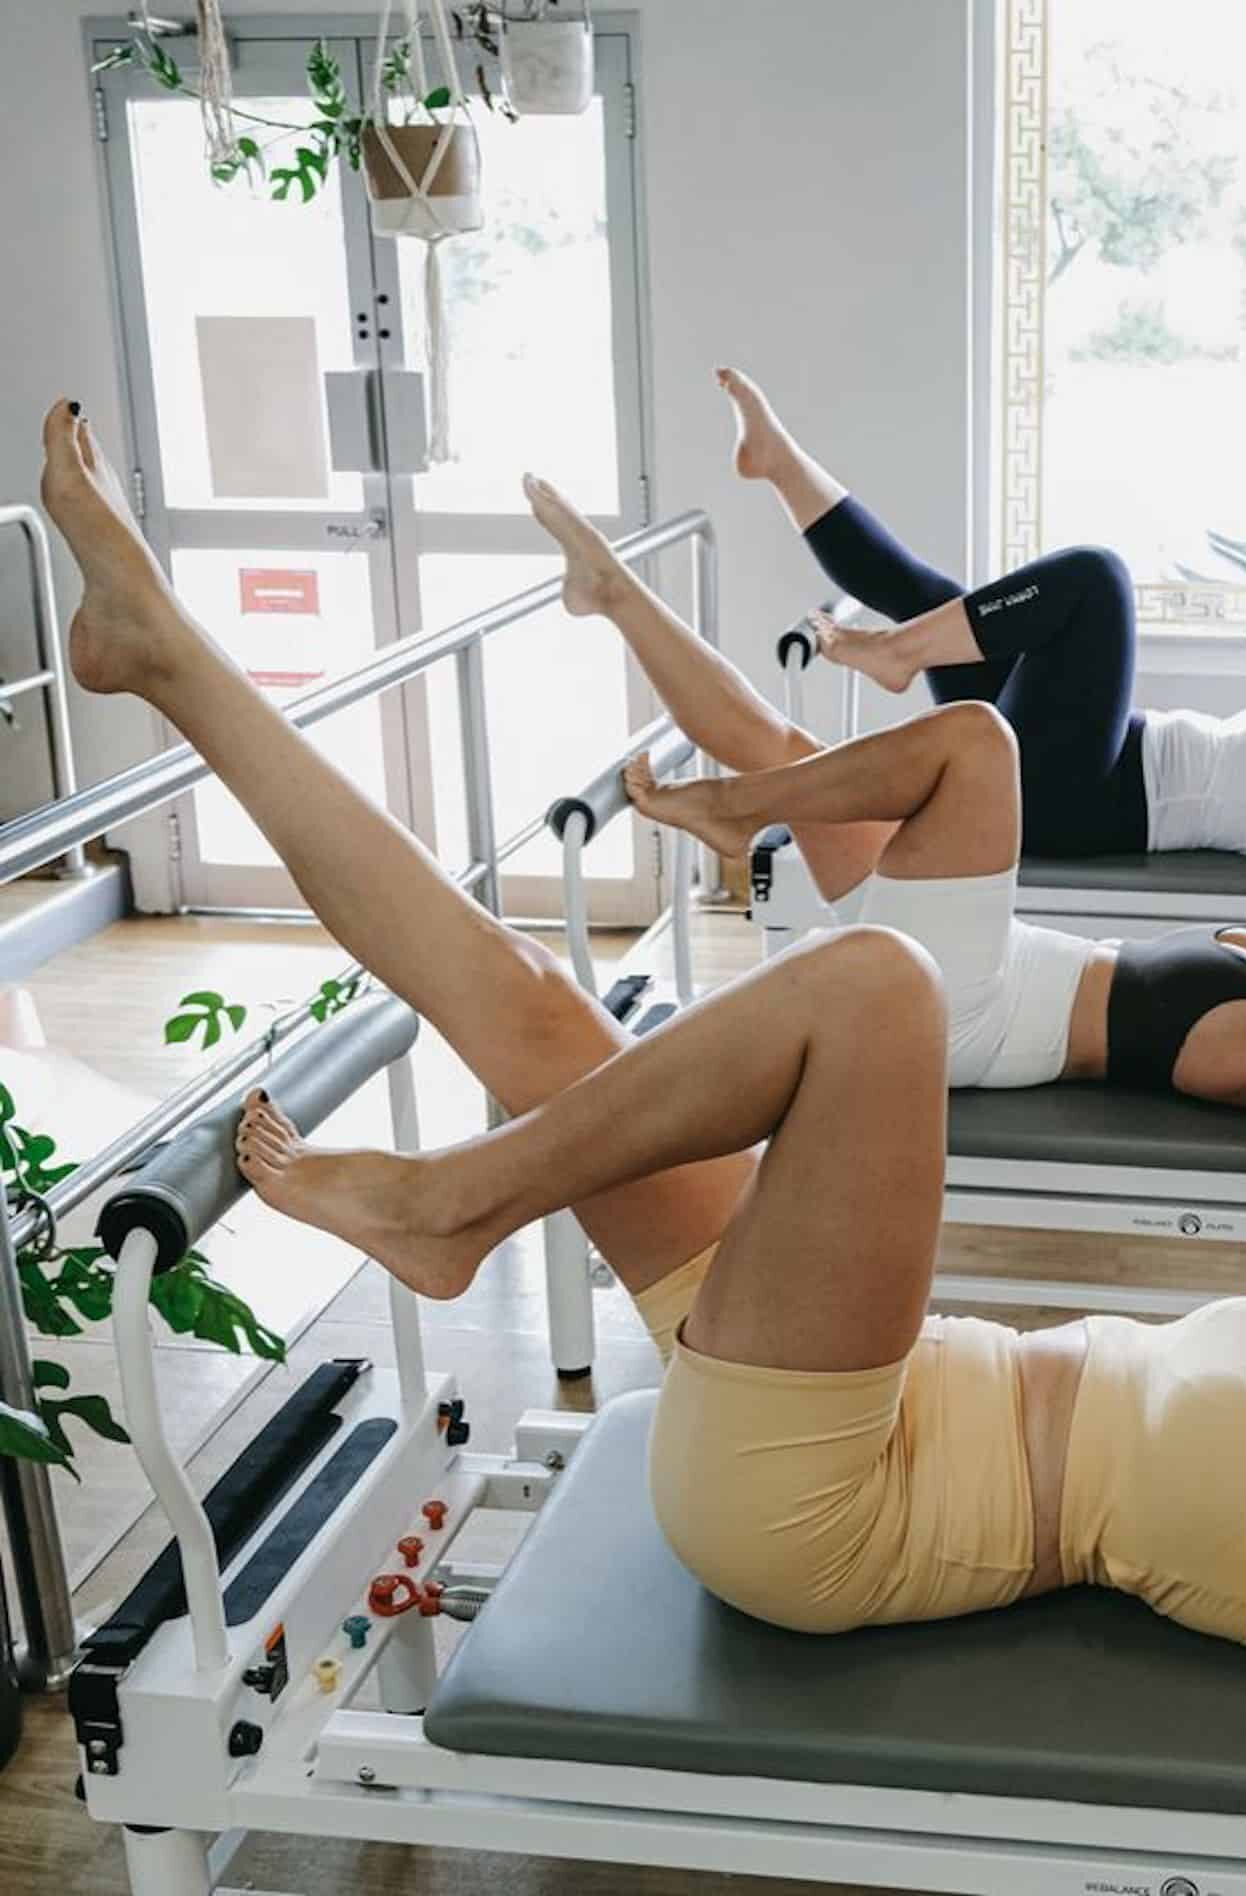 Women on reformer pilates machines.